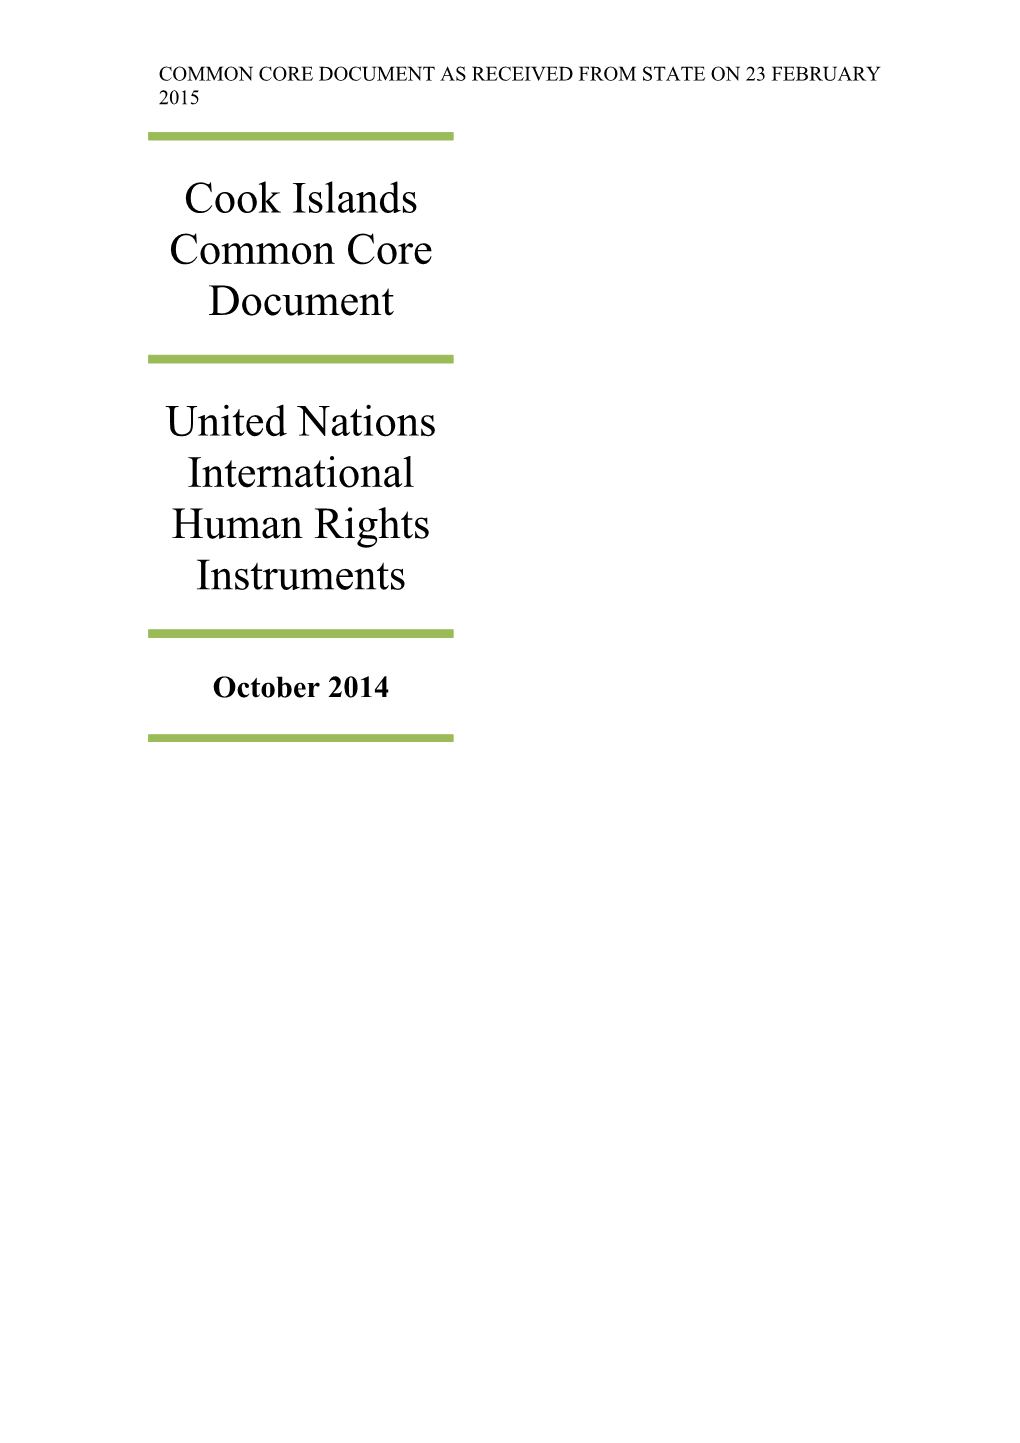 Cook Islands Common Core Document